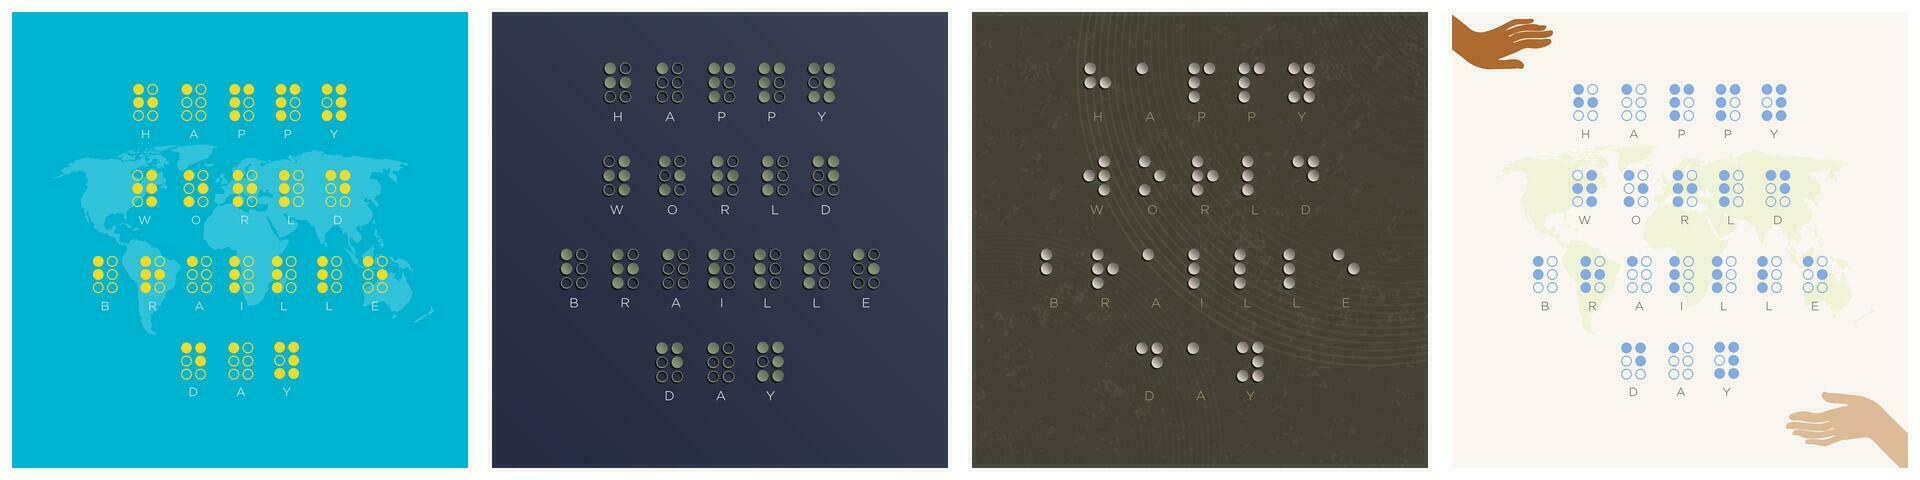 contento mundo braille día saludo tarjeta póster diseños vistoso aumento braille alfabeto en vistoso antecedentes. mundo braille día concepto. vector ilustración. eps 10